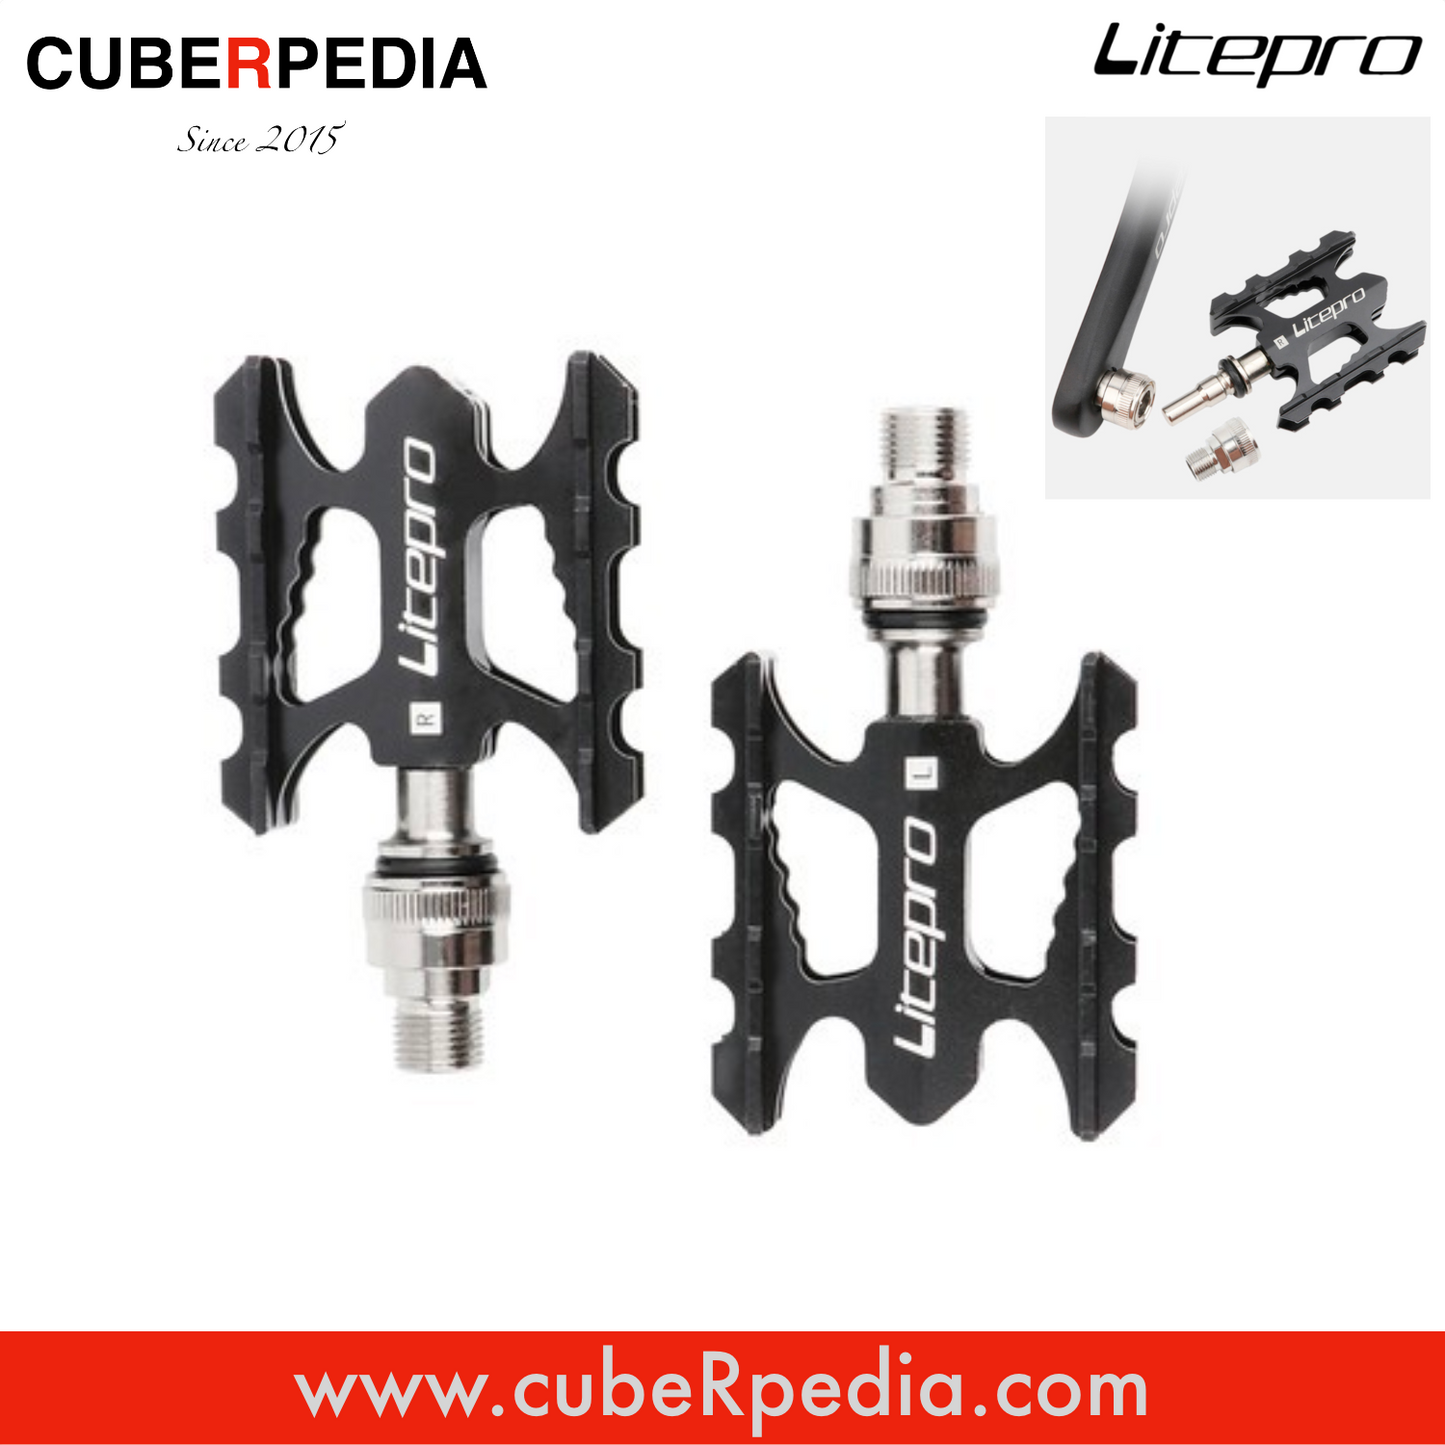 Litepro Quick Release Pedals - Black